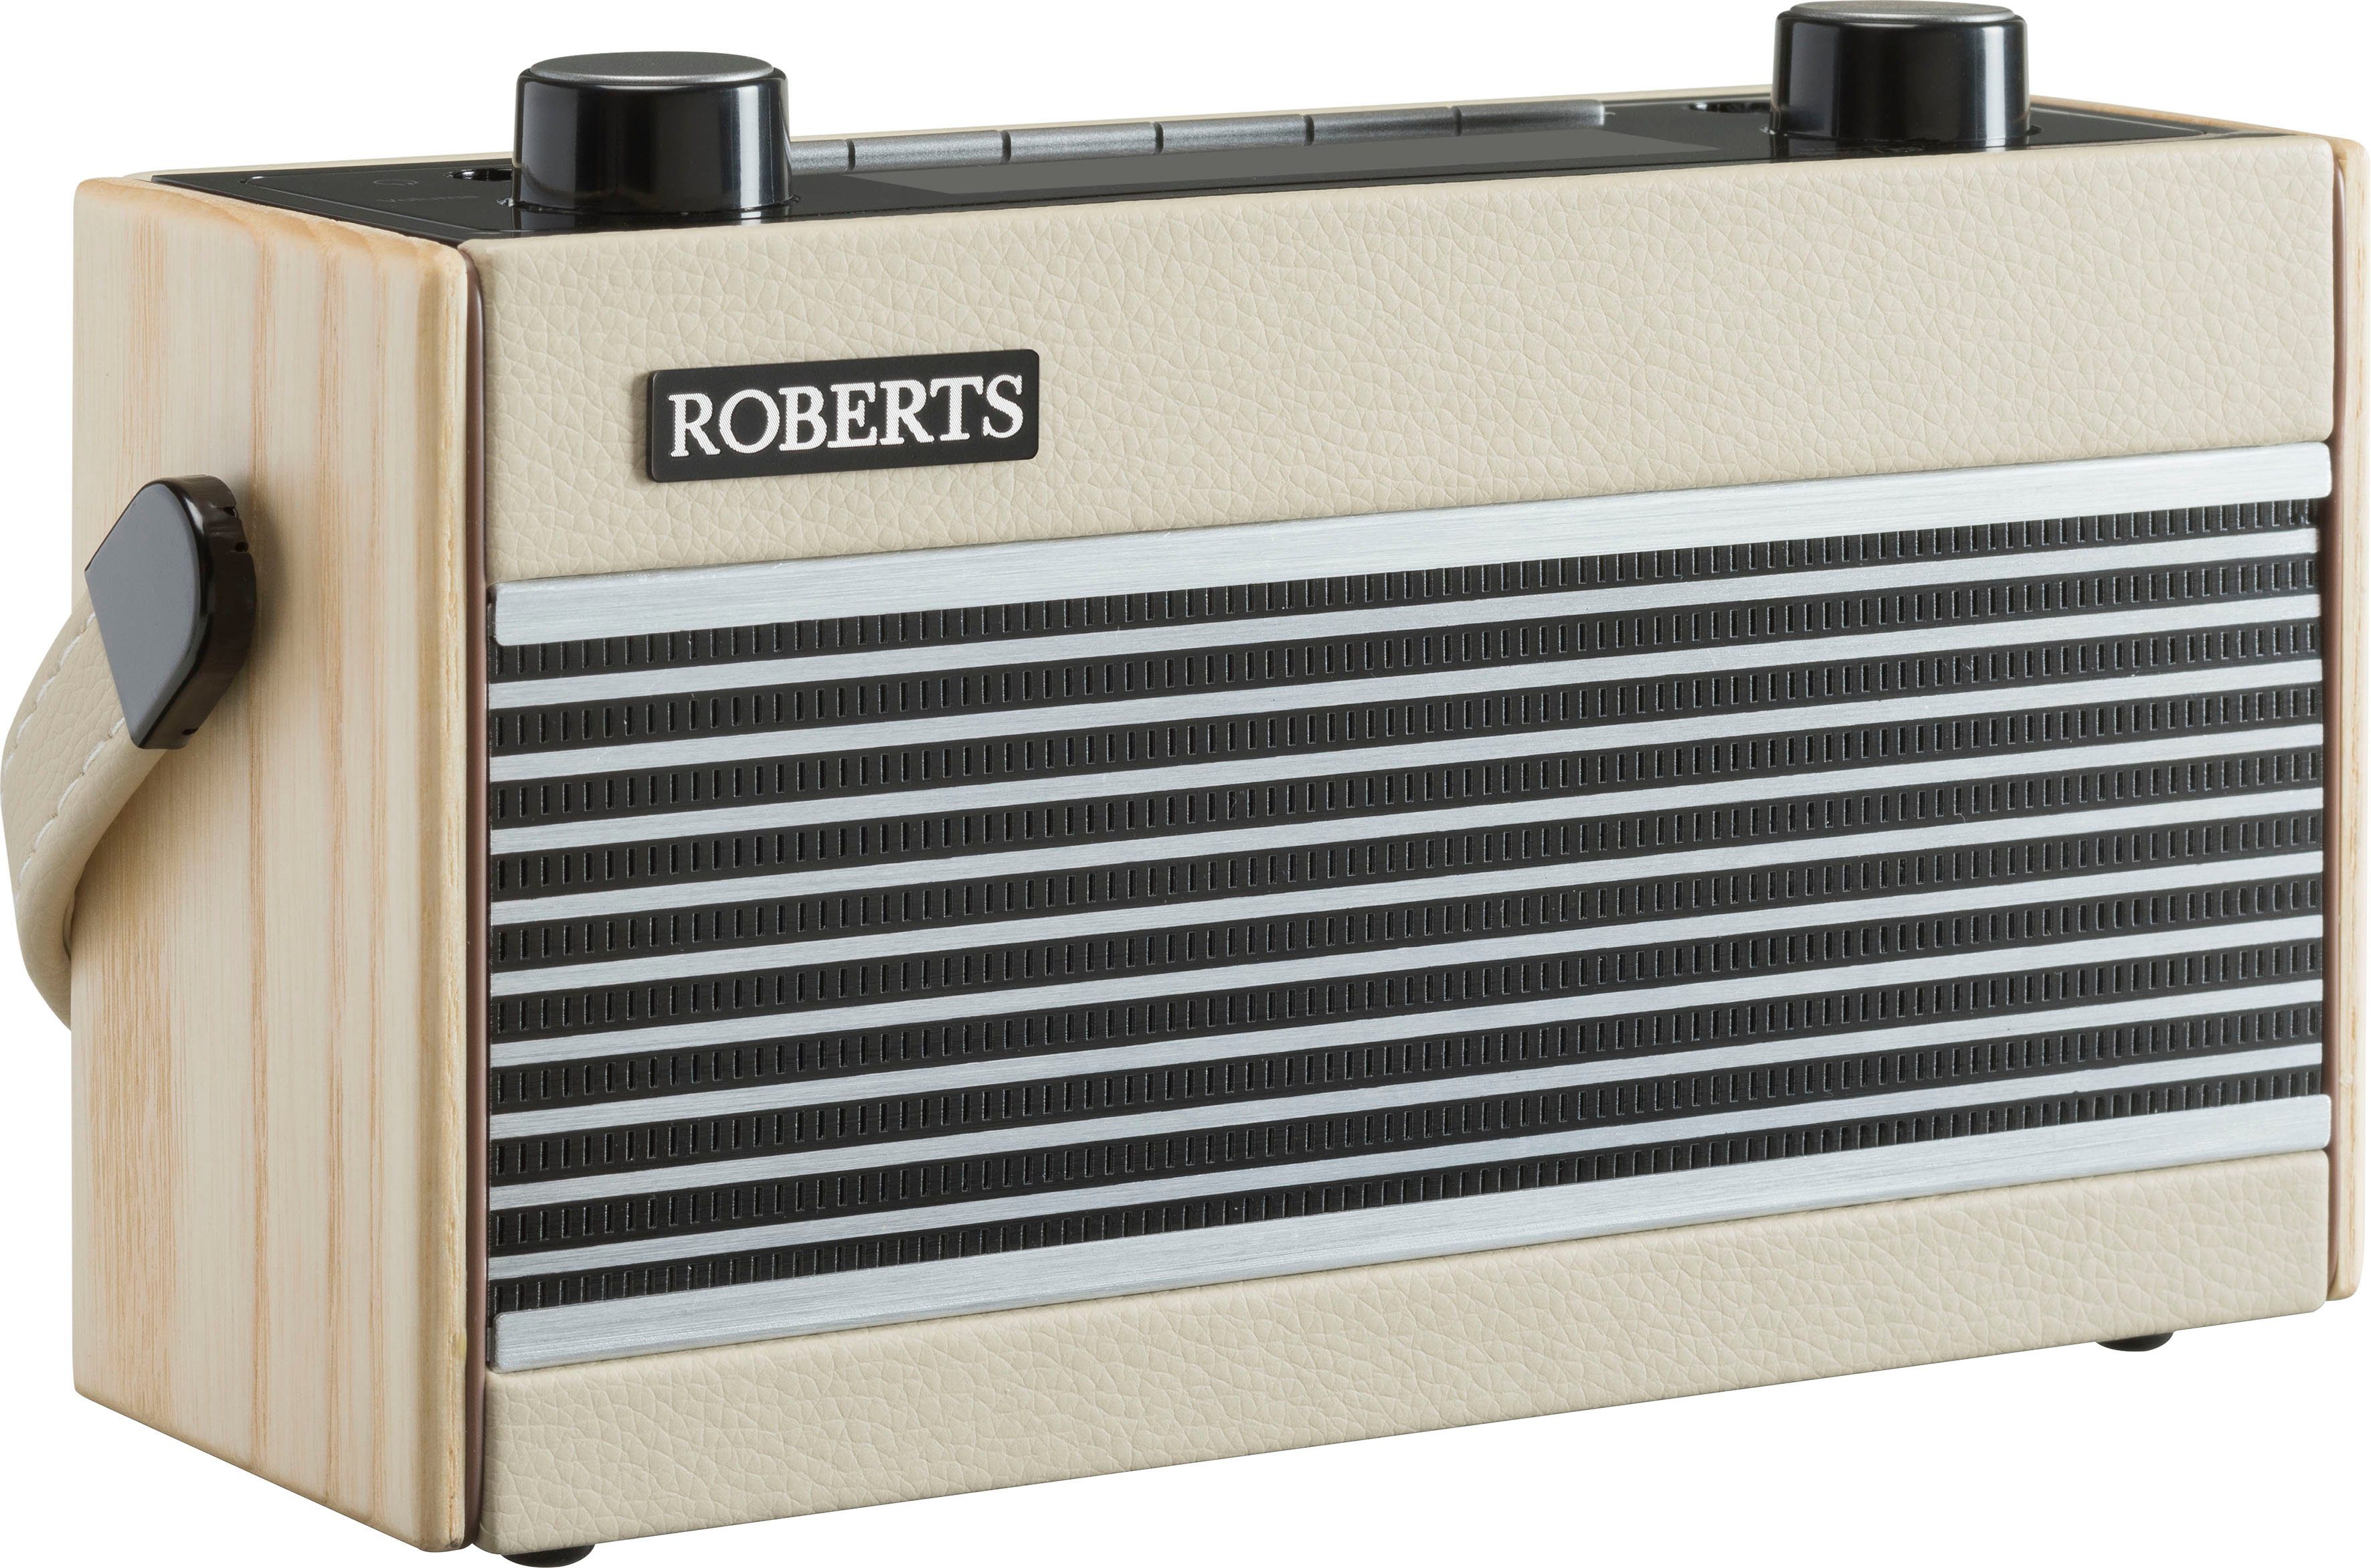 ROBERTS cream pastel FM-Tuner) RamblerBT RADIO (Digitalradio (DAB) (DAB), Digitalradio